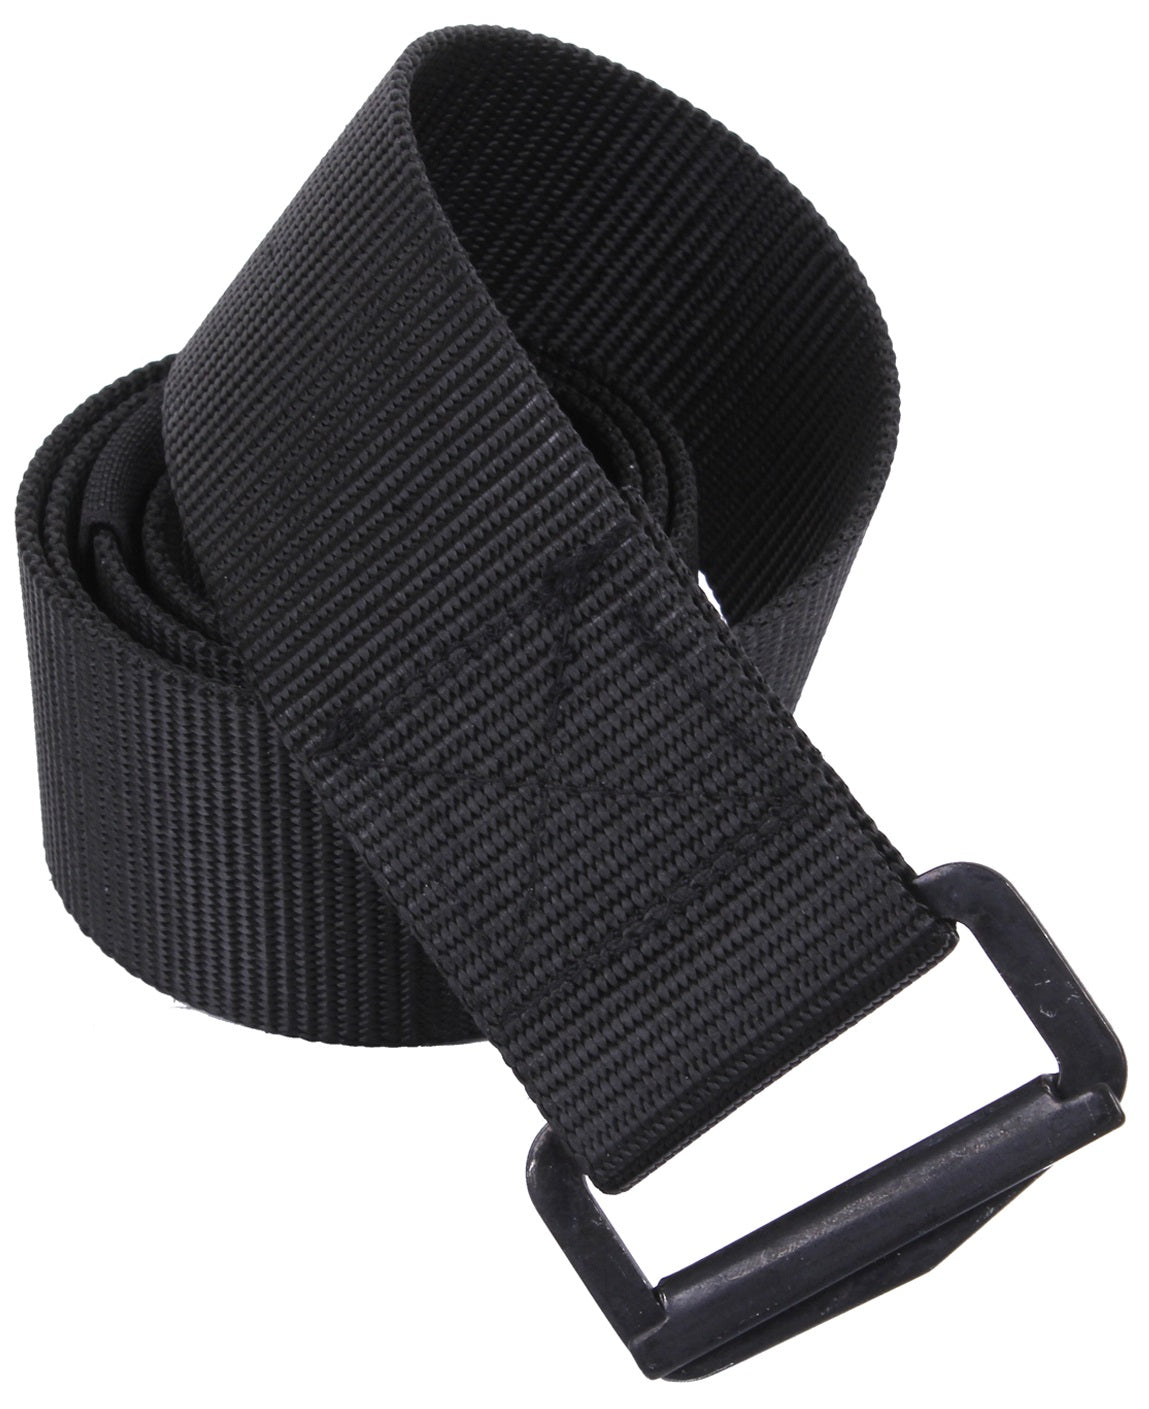 Rothco Adjustable BDU Belt - Black